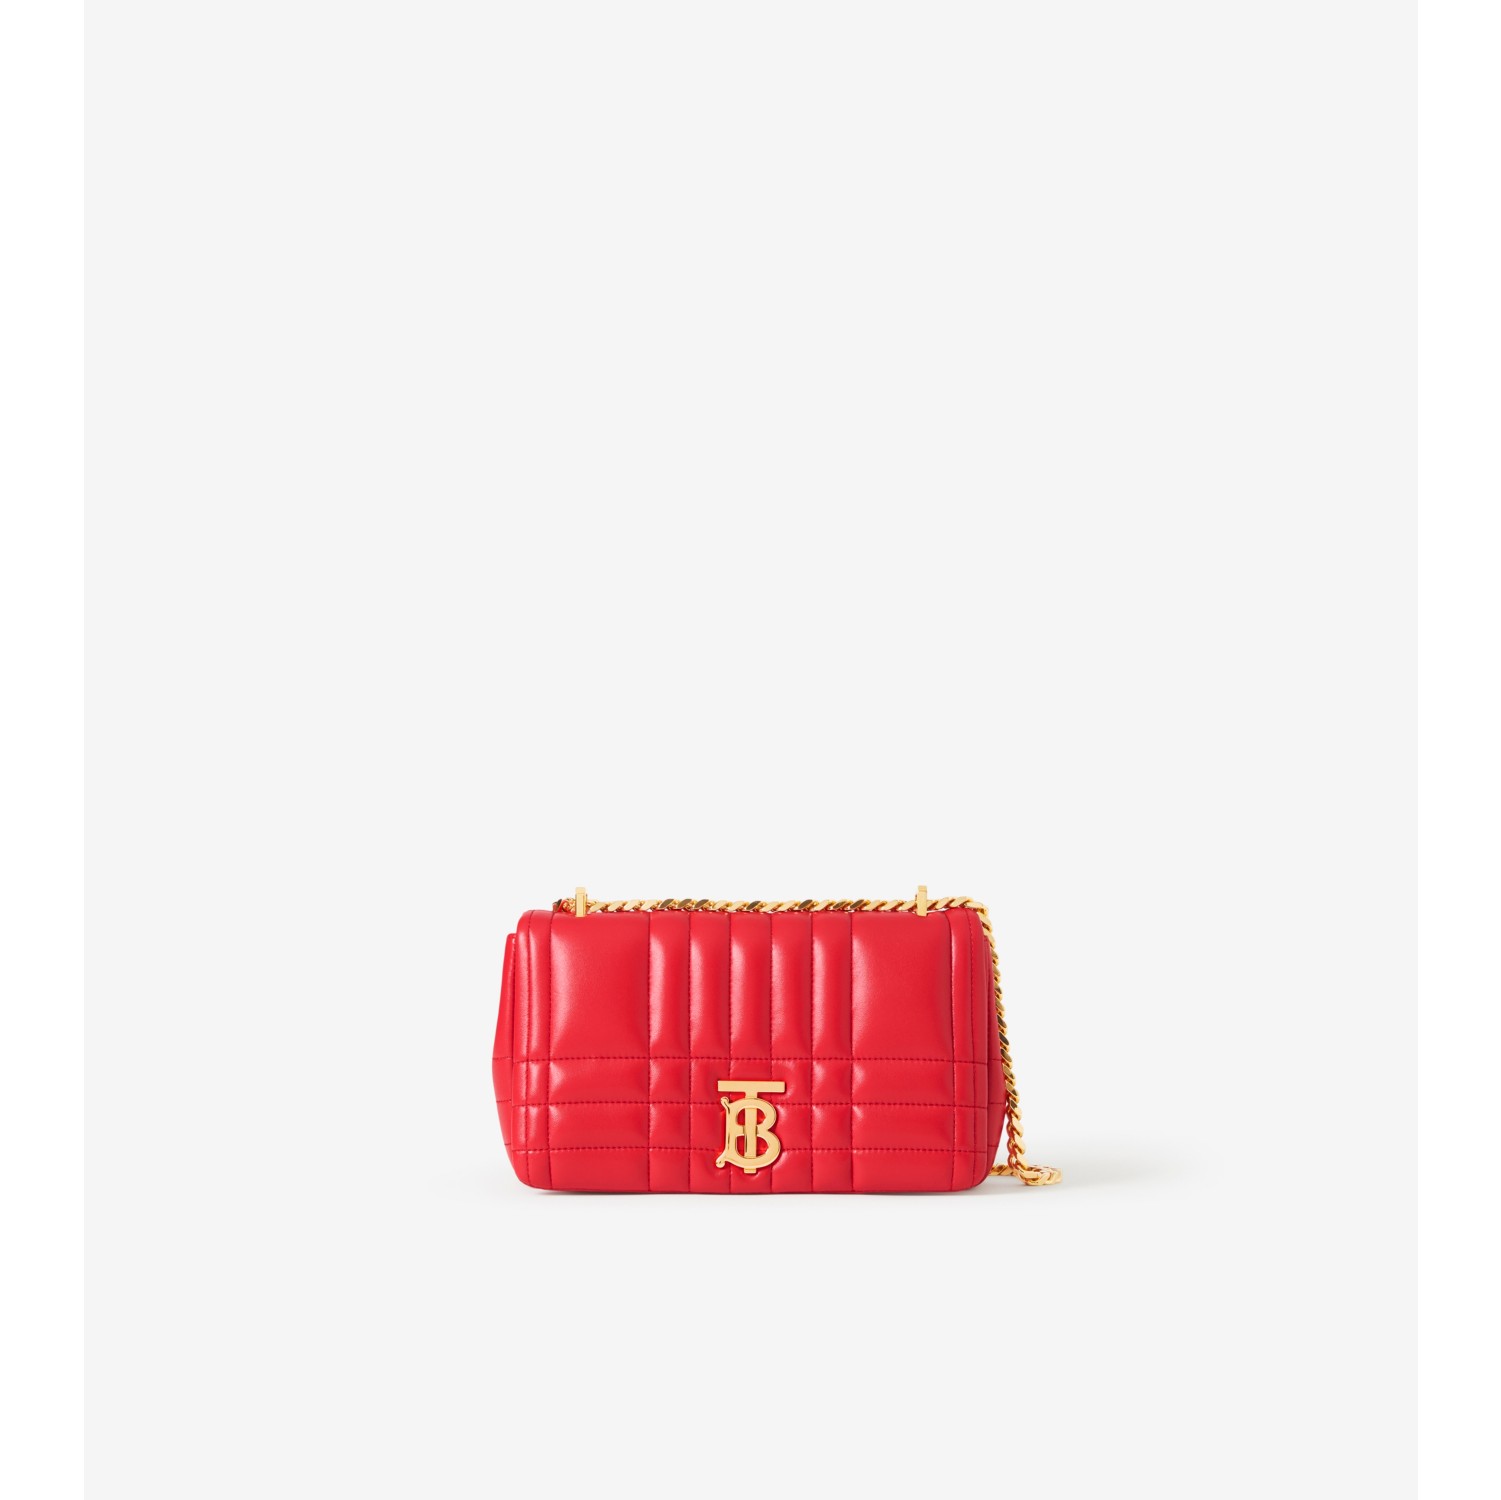 Mini Lola Bag in Bright Red - Women